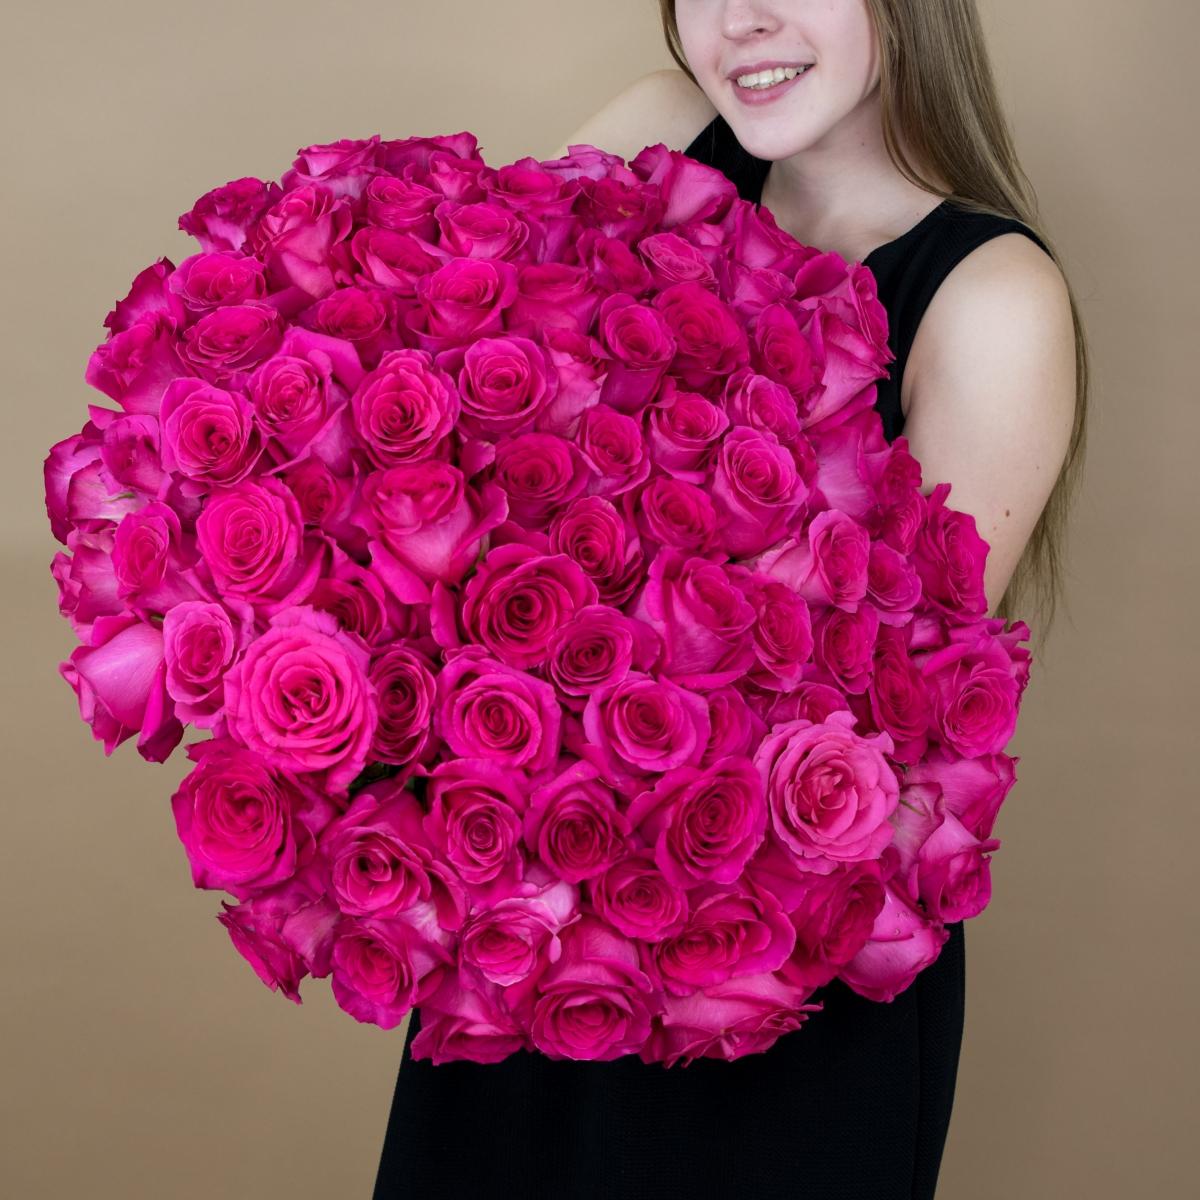 Букет из розовых роз 75 шт. (40 см) Артикул: 90013